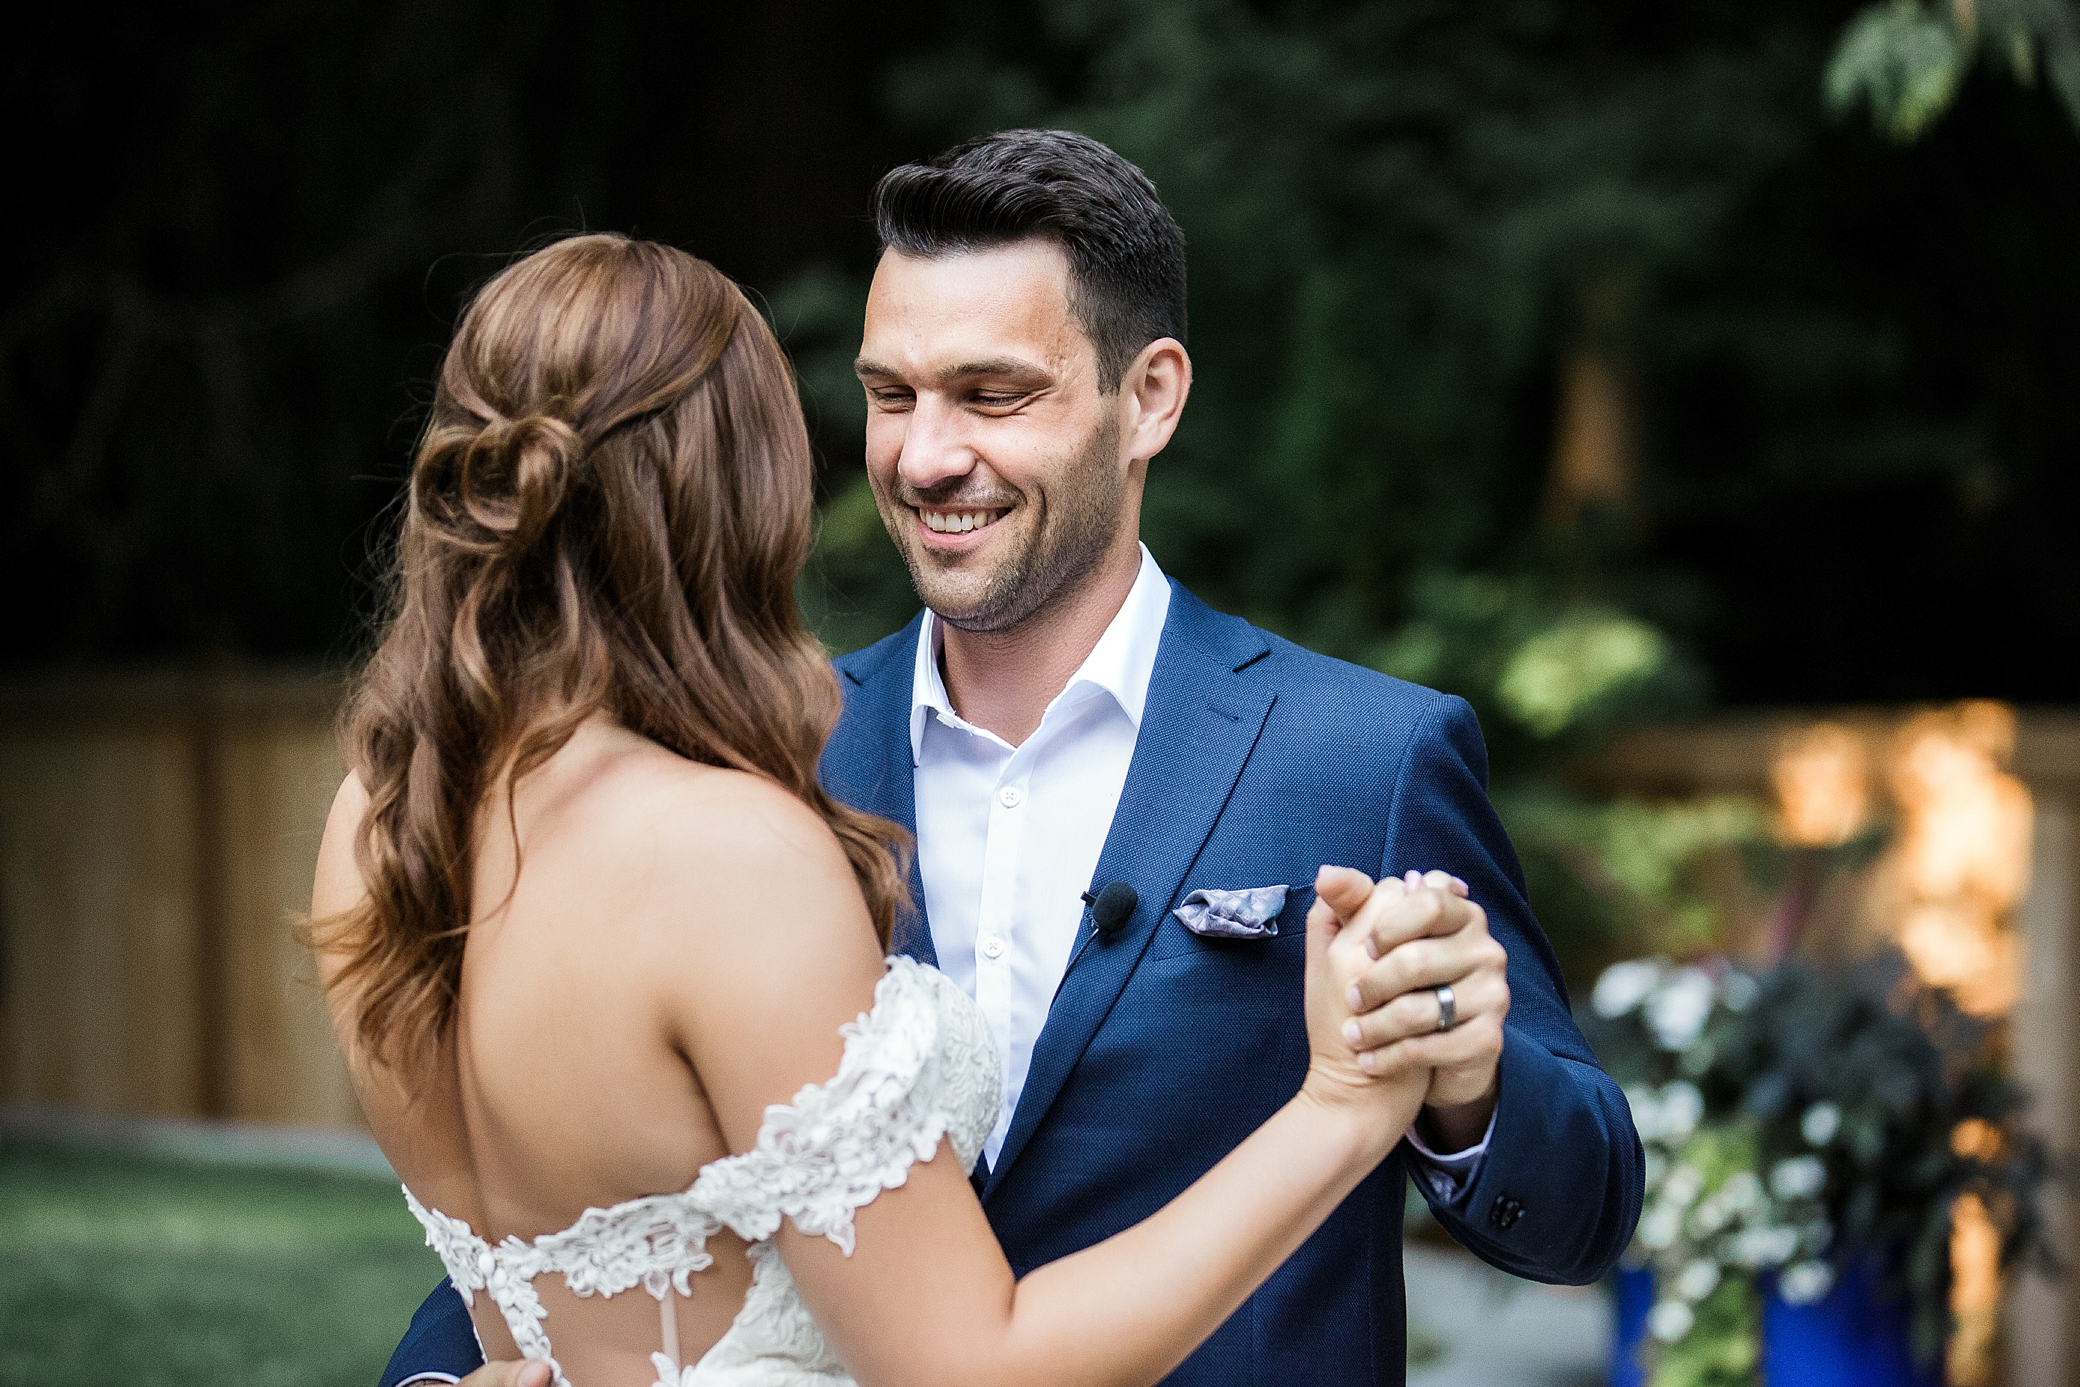 Backyard wedding | First dance for Bride and Groom | Megan Montalvo Photography